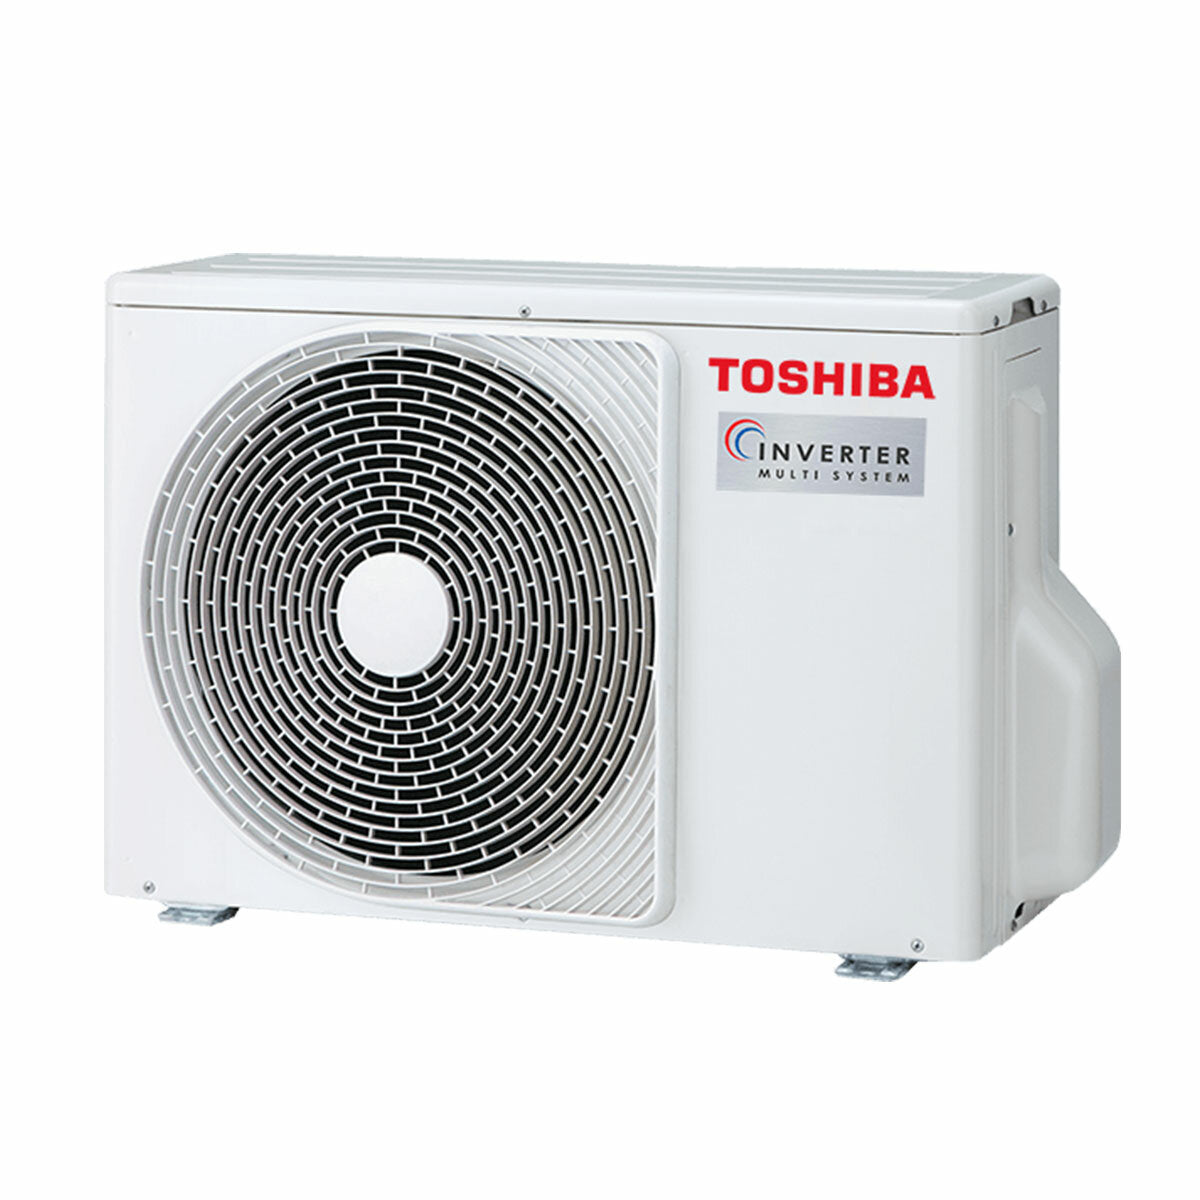 Toshiba New Seiya trial split air conditioner 7000+7000+12000 BTU inverter A+++ external unit 5.2 kW